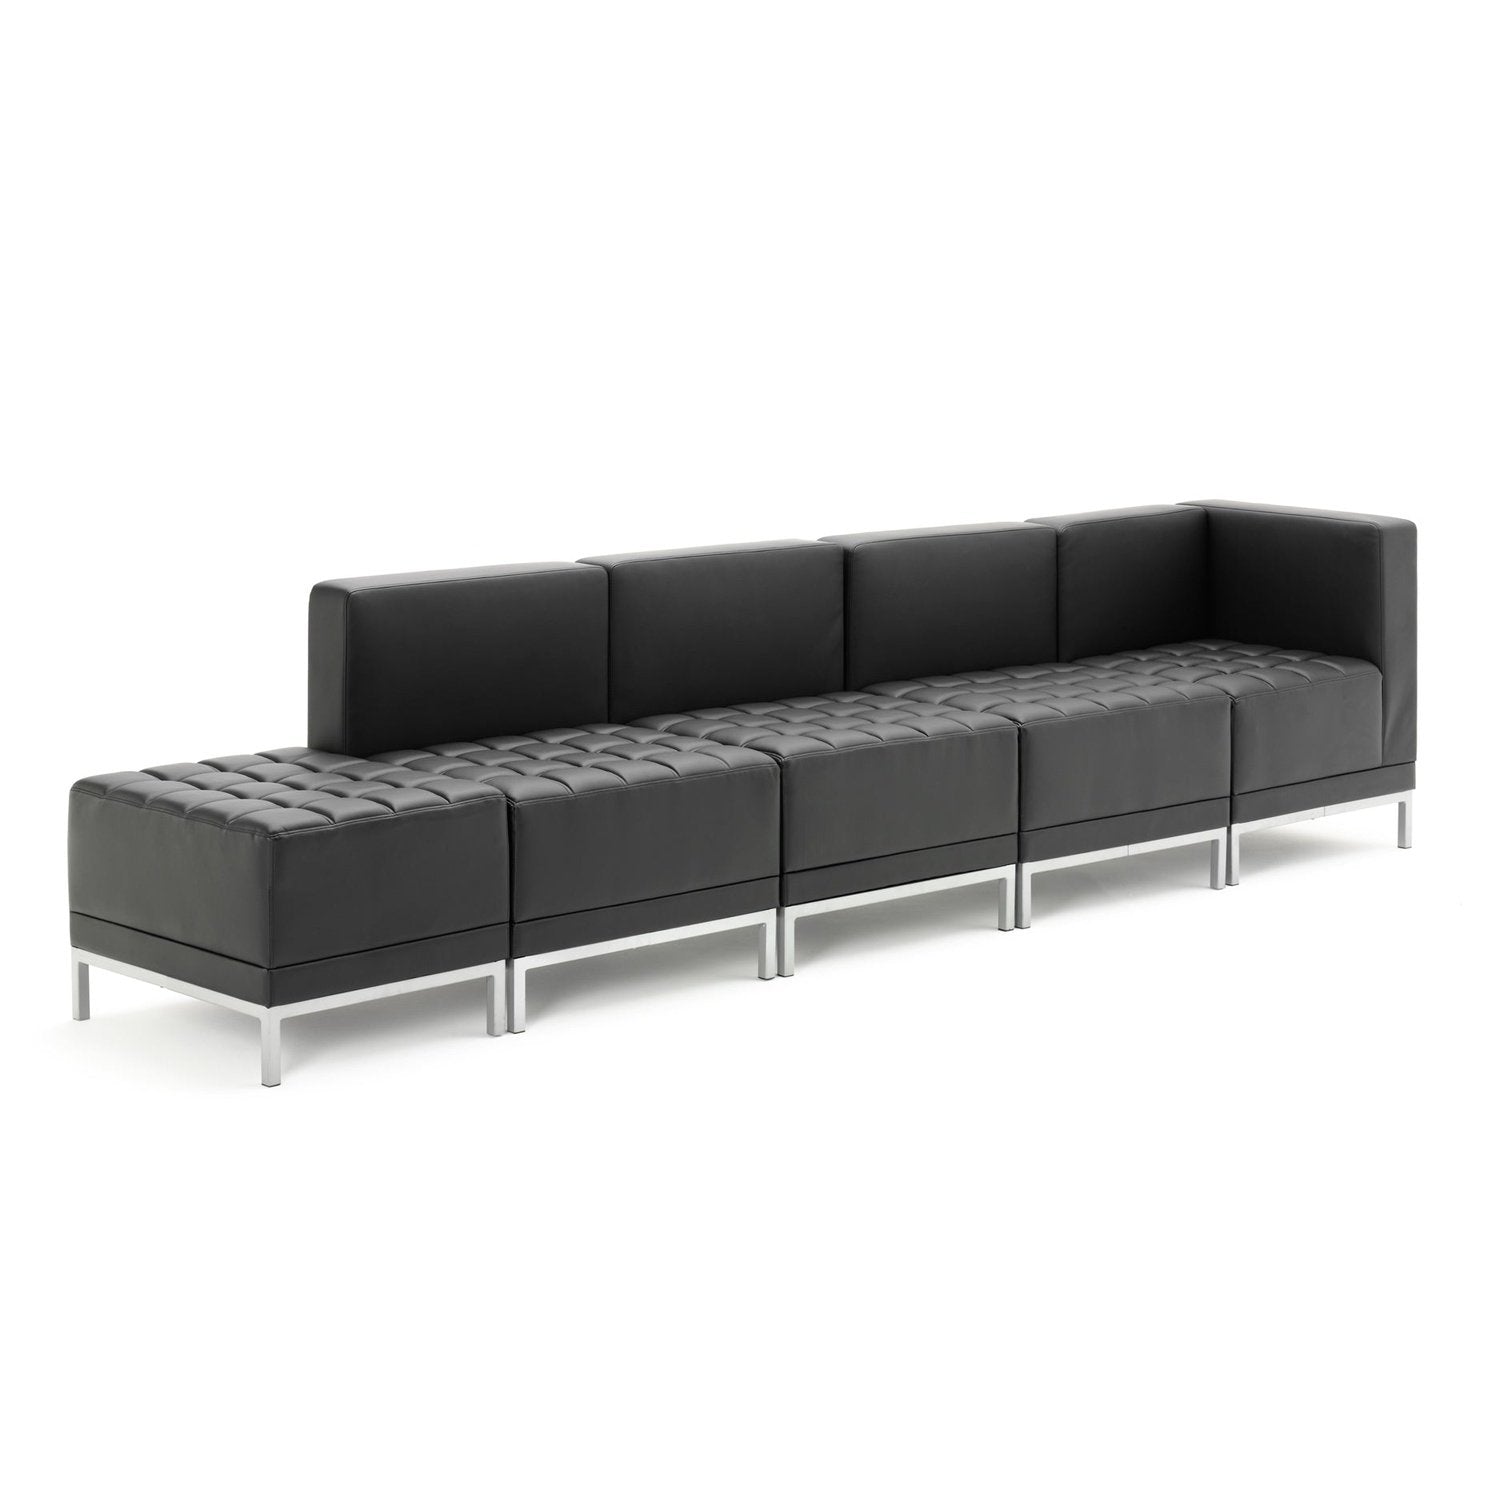 Infinity Modular Corner Unit Sofa Chair - Soft Bonded Leather, Chrome Metal Frame, Pre-Assembled, 150kg Capacity, 5hr Usage, 2yr Guarantee